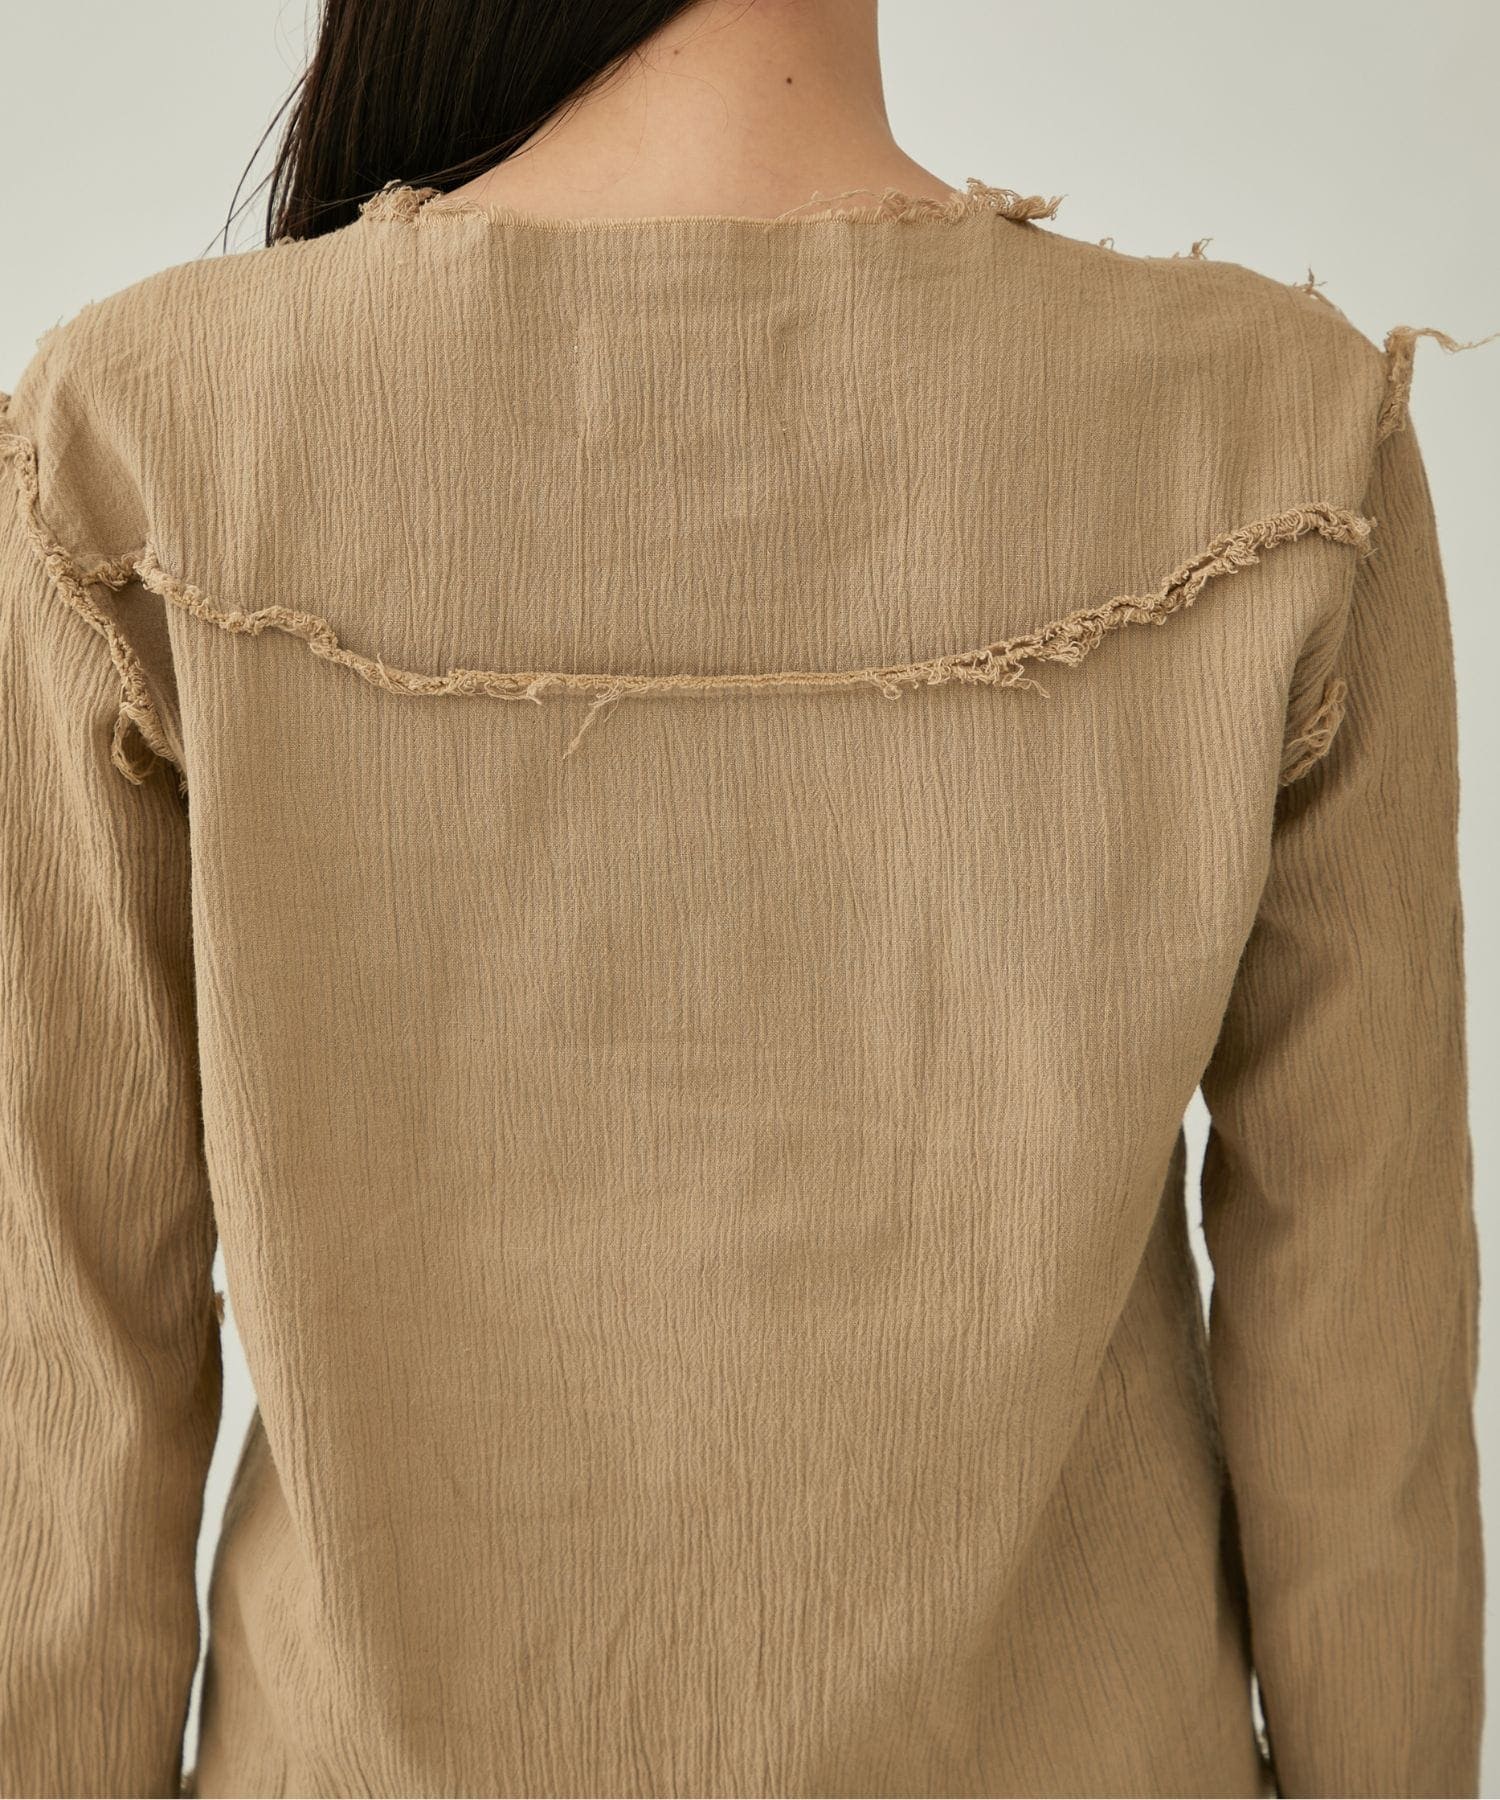 Cotton yoryu ethical dye long sleeve top kotohayokozawa